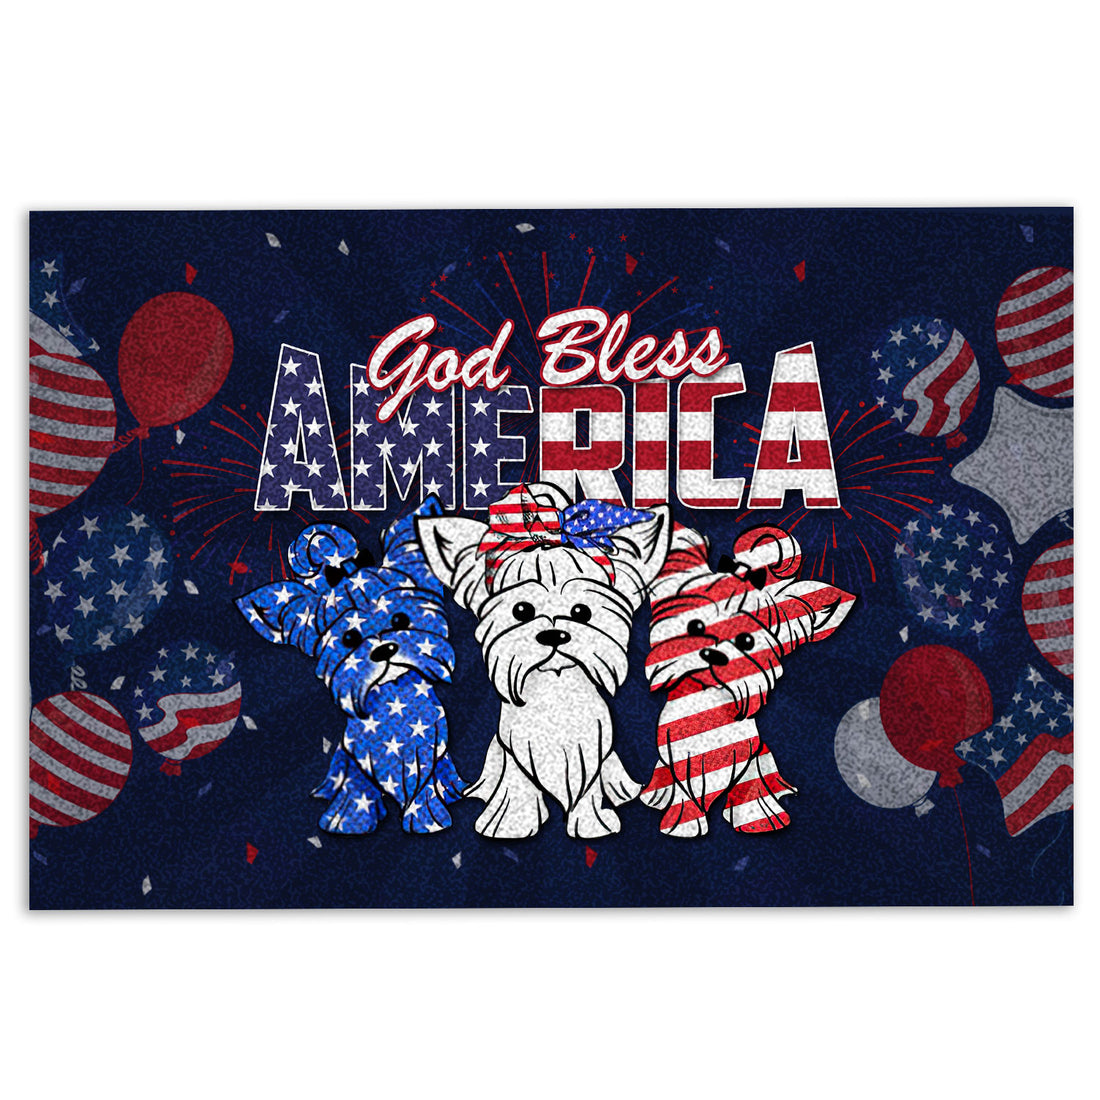 Ohaprints-Doormat-Outdoor-Indoor-Yorkshire-Terrier-God-Bless-America-4Th-Of-July-Independence-Day-Rubber-Door-Mat-612-18'' x 30''